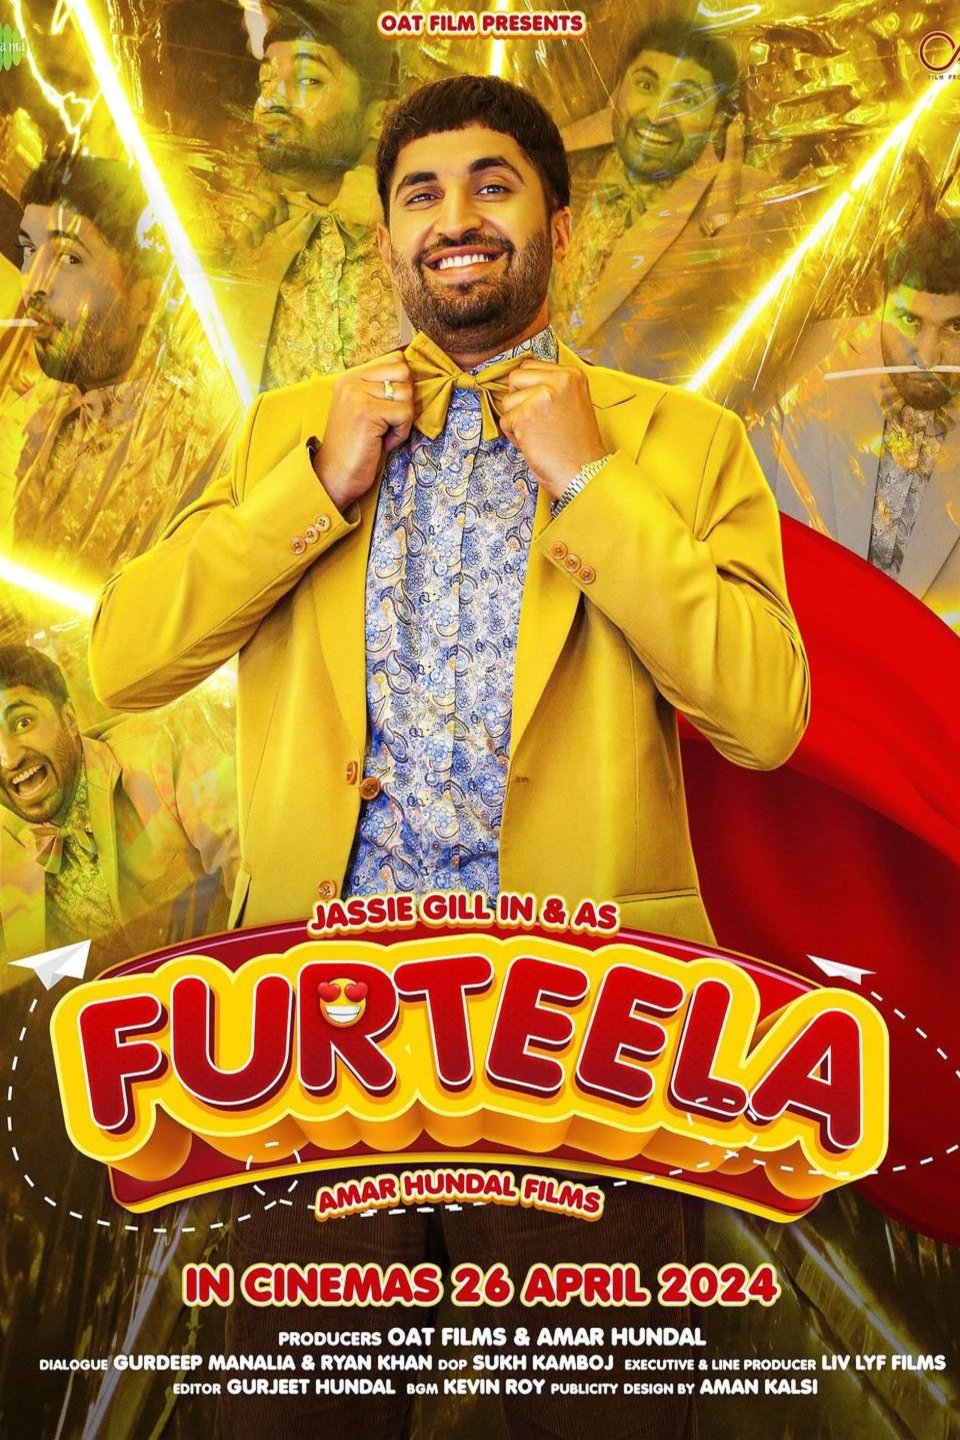 L'affiche originale du film Furteela en Penjabi